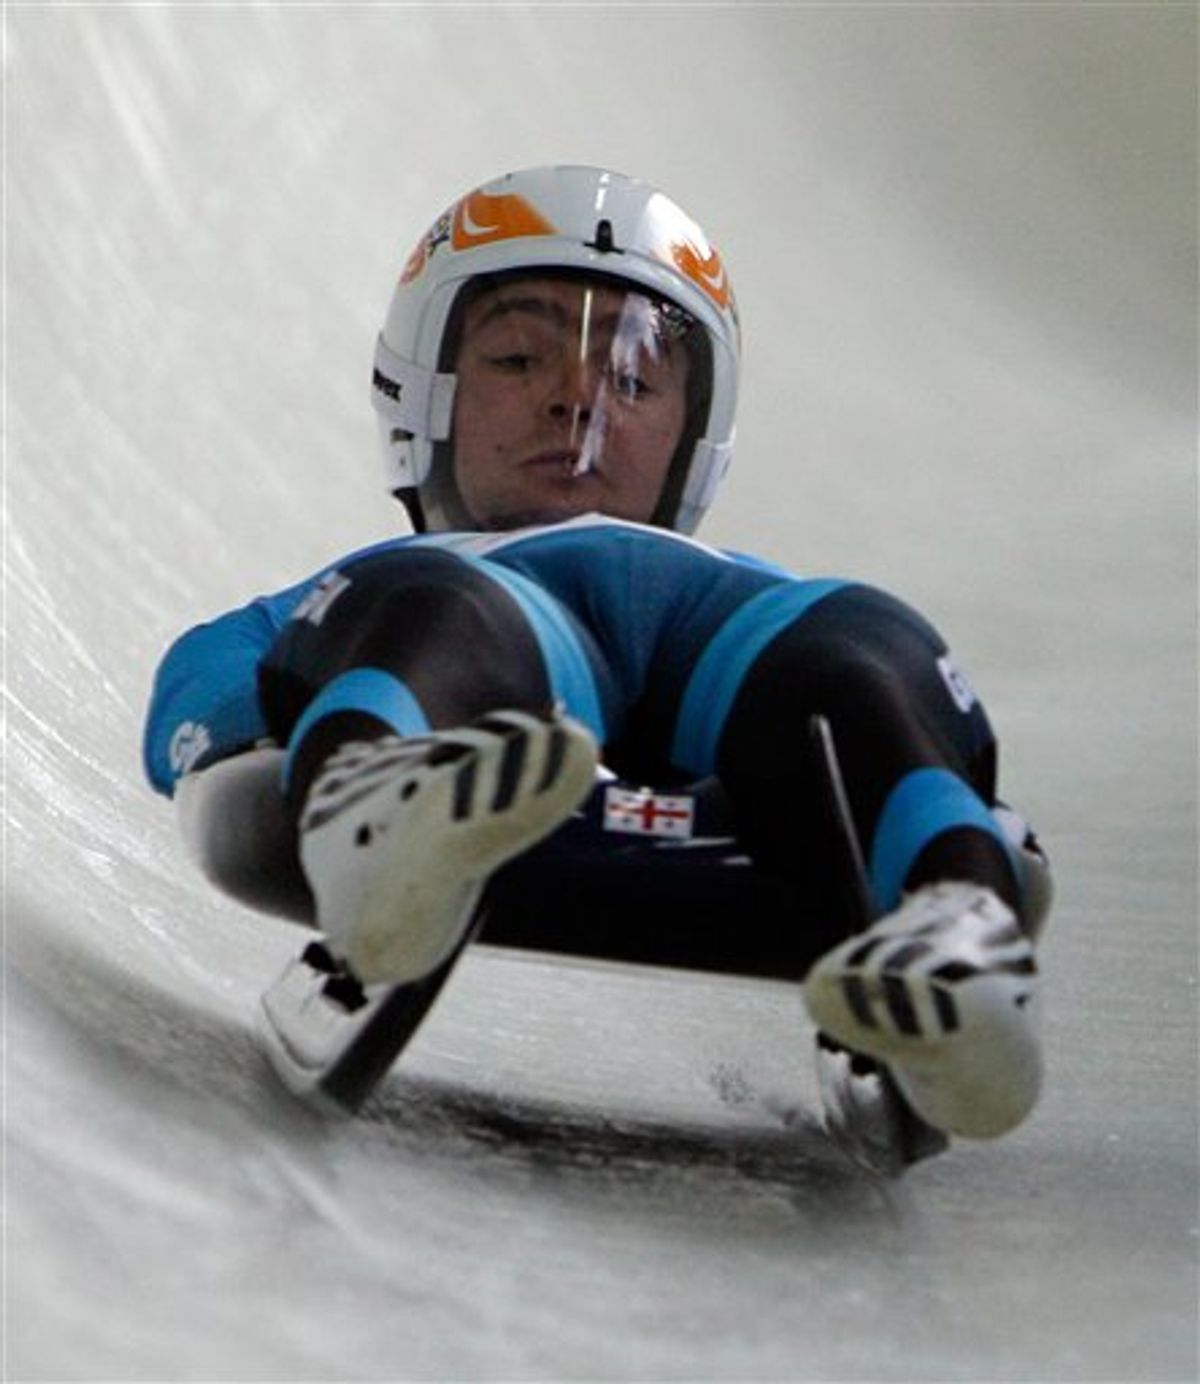 Nodar Kumaritashvili of Georgia is seen just before crashing during a training run for the men's singles luge at the Vancouver 2010 Olympics in Whistler, British Columbia, Friday, Feb. 12, 2010.  (AP Photo/Ricardo Mazalan) (AP)